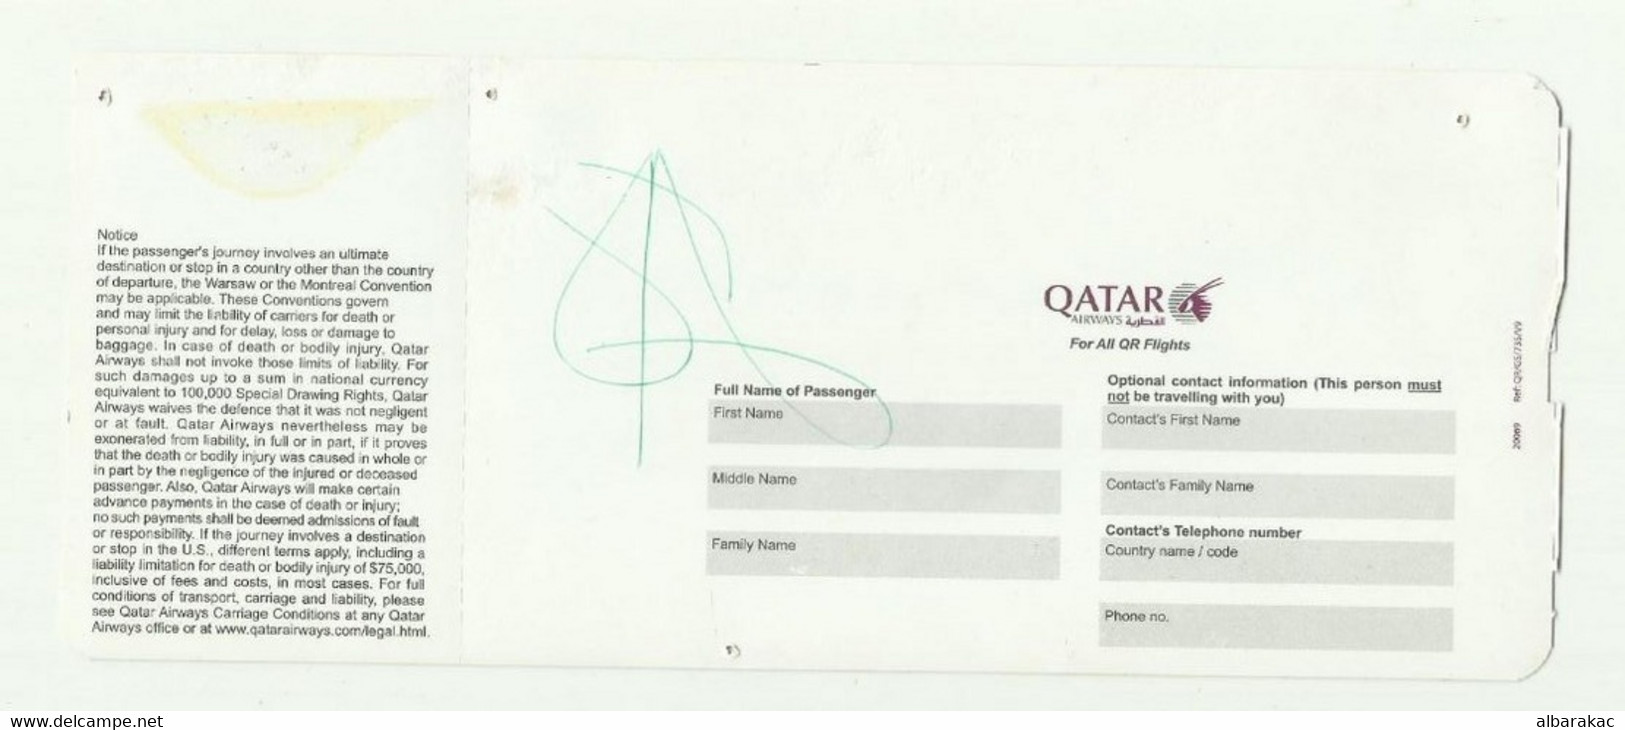 Qatar Airways Boarding Pass - Doha To Sydney - Welt